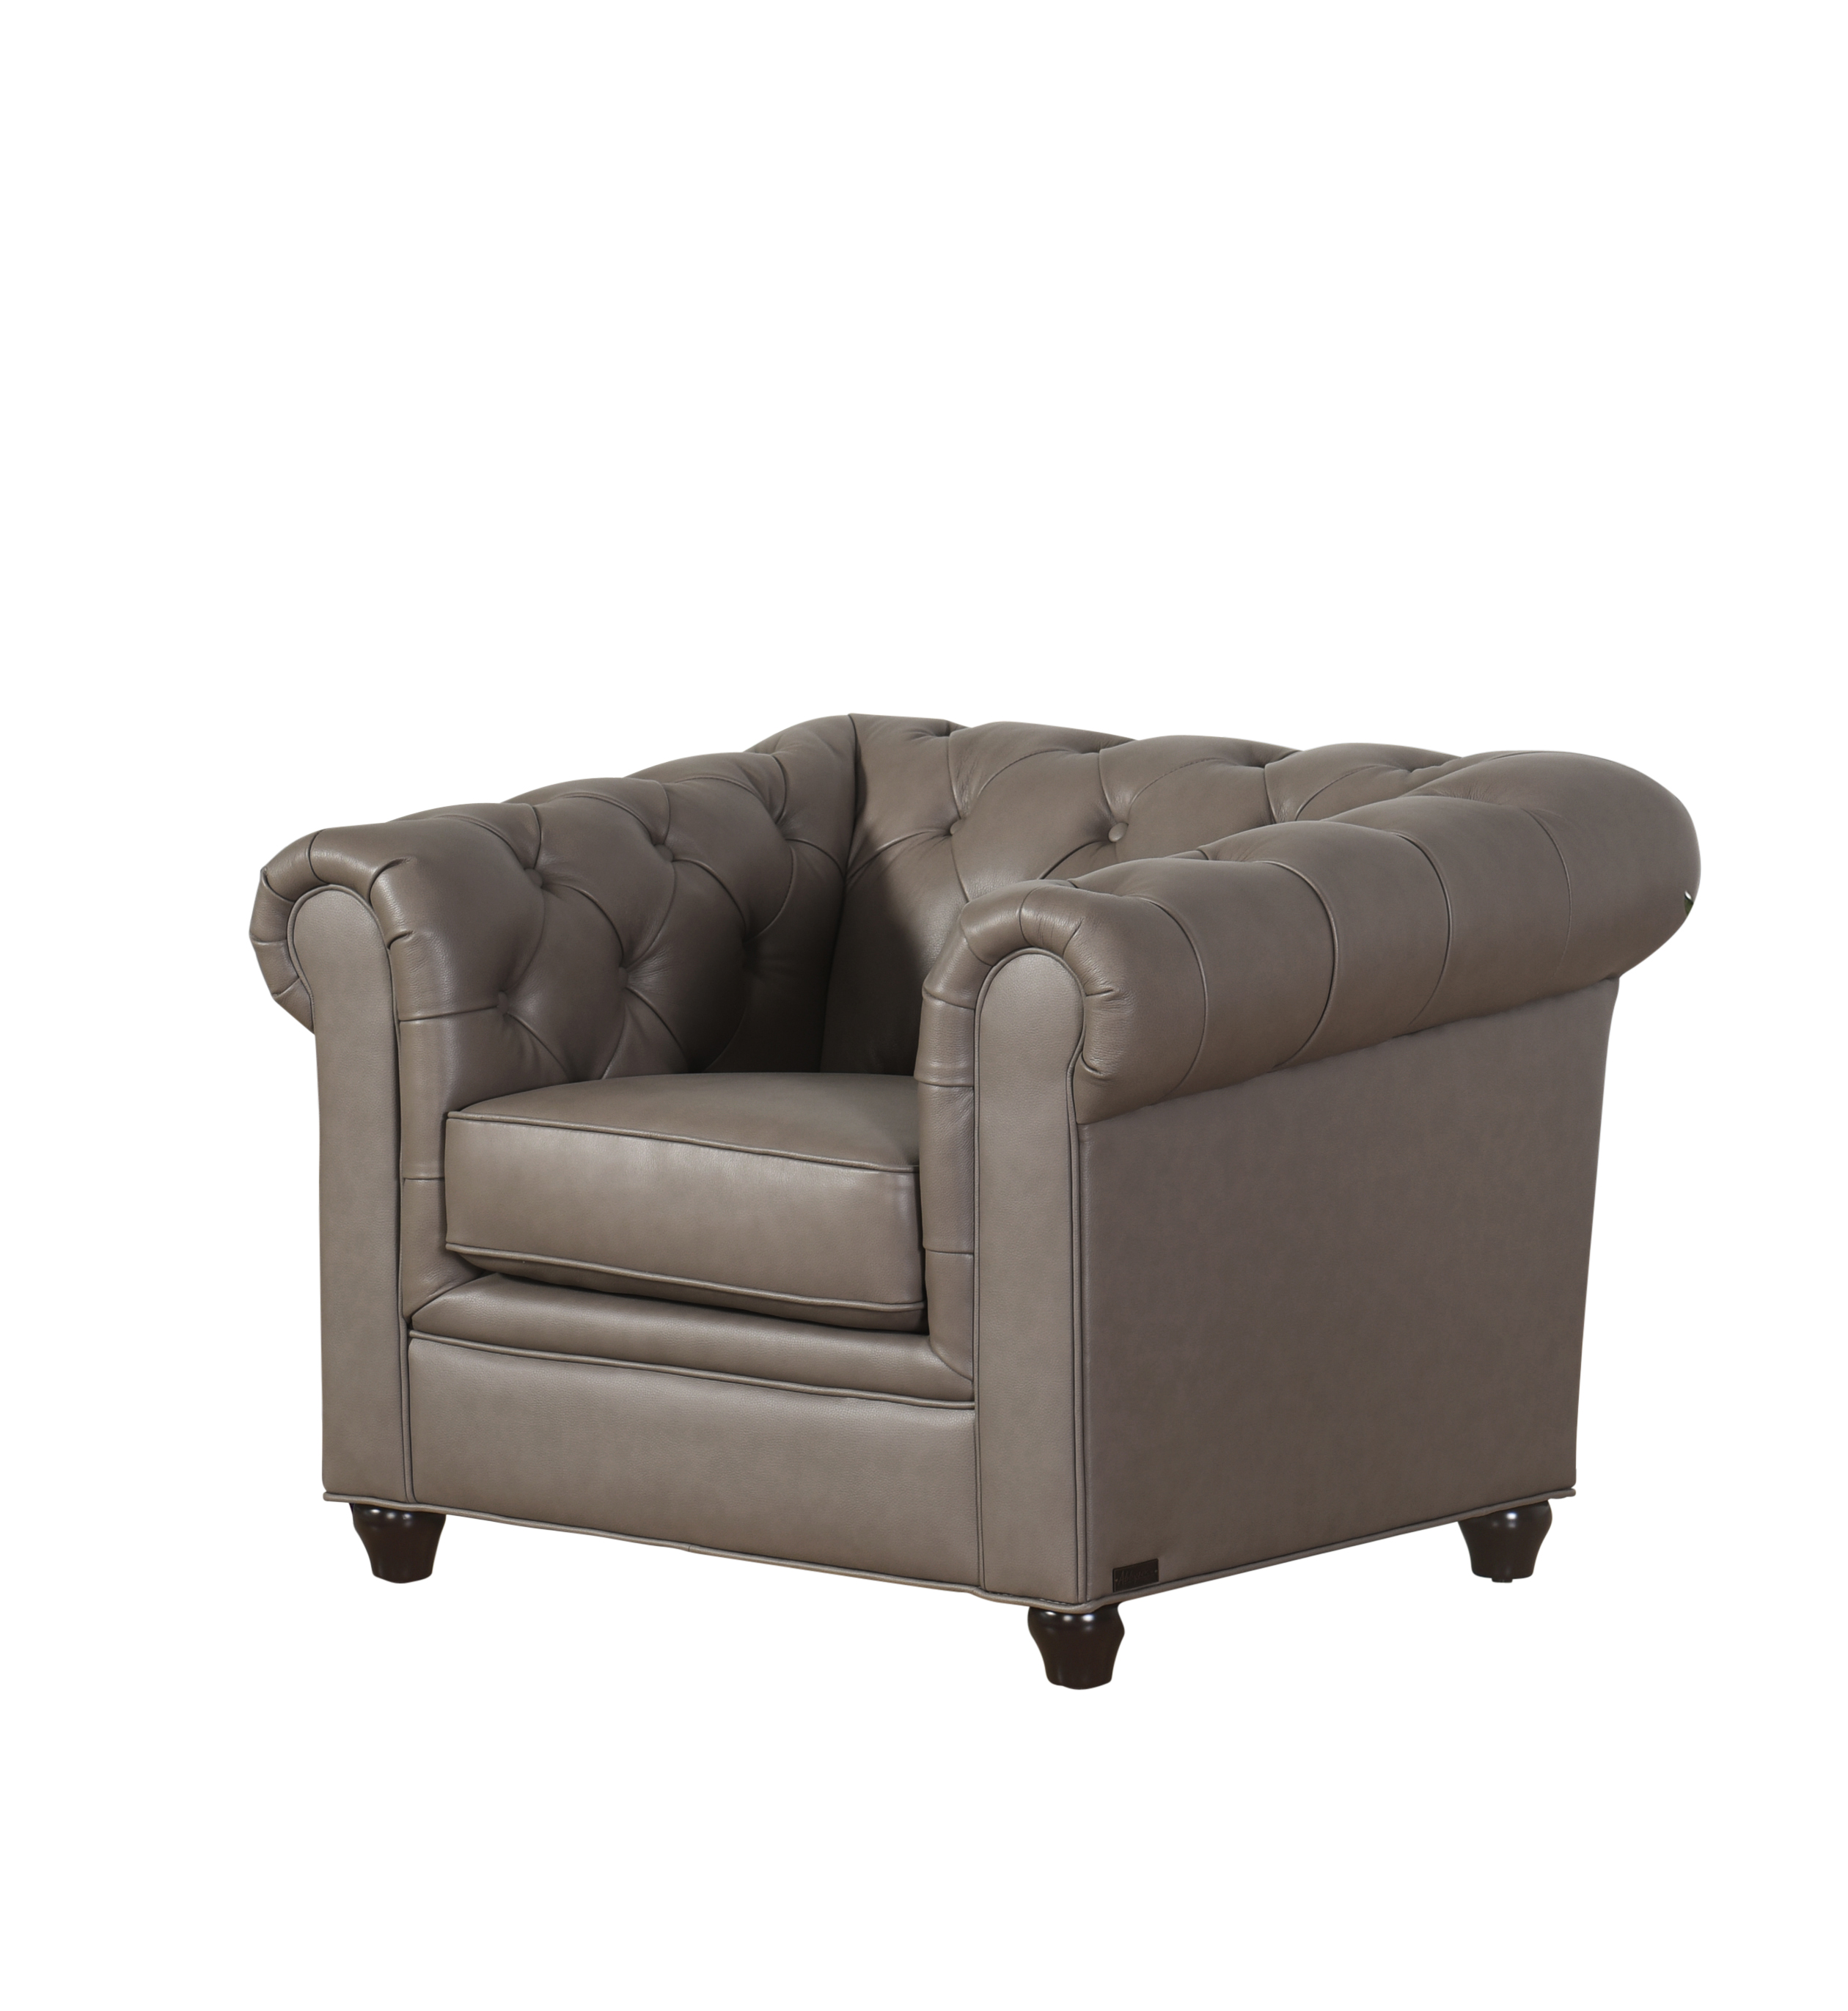 Mason Tufted Leather Armchair, Grey - Walmart.com